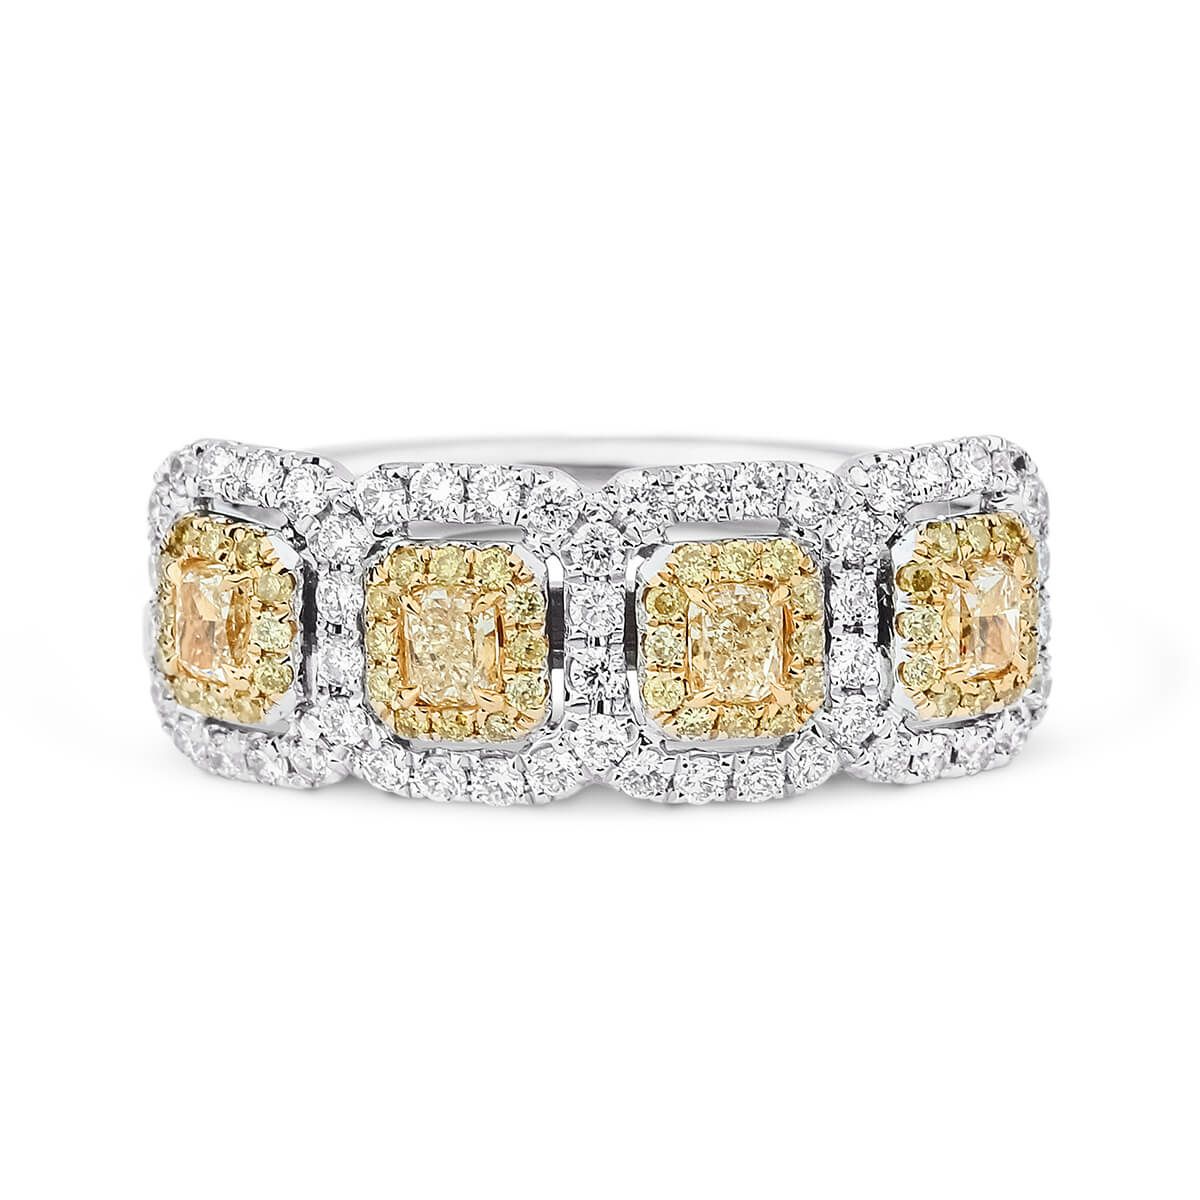 Fancy Intense Yellow Diamond Ring, 1.37 Ct. TW, Radiant shape